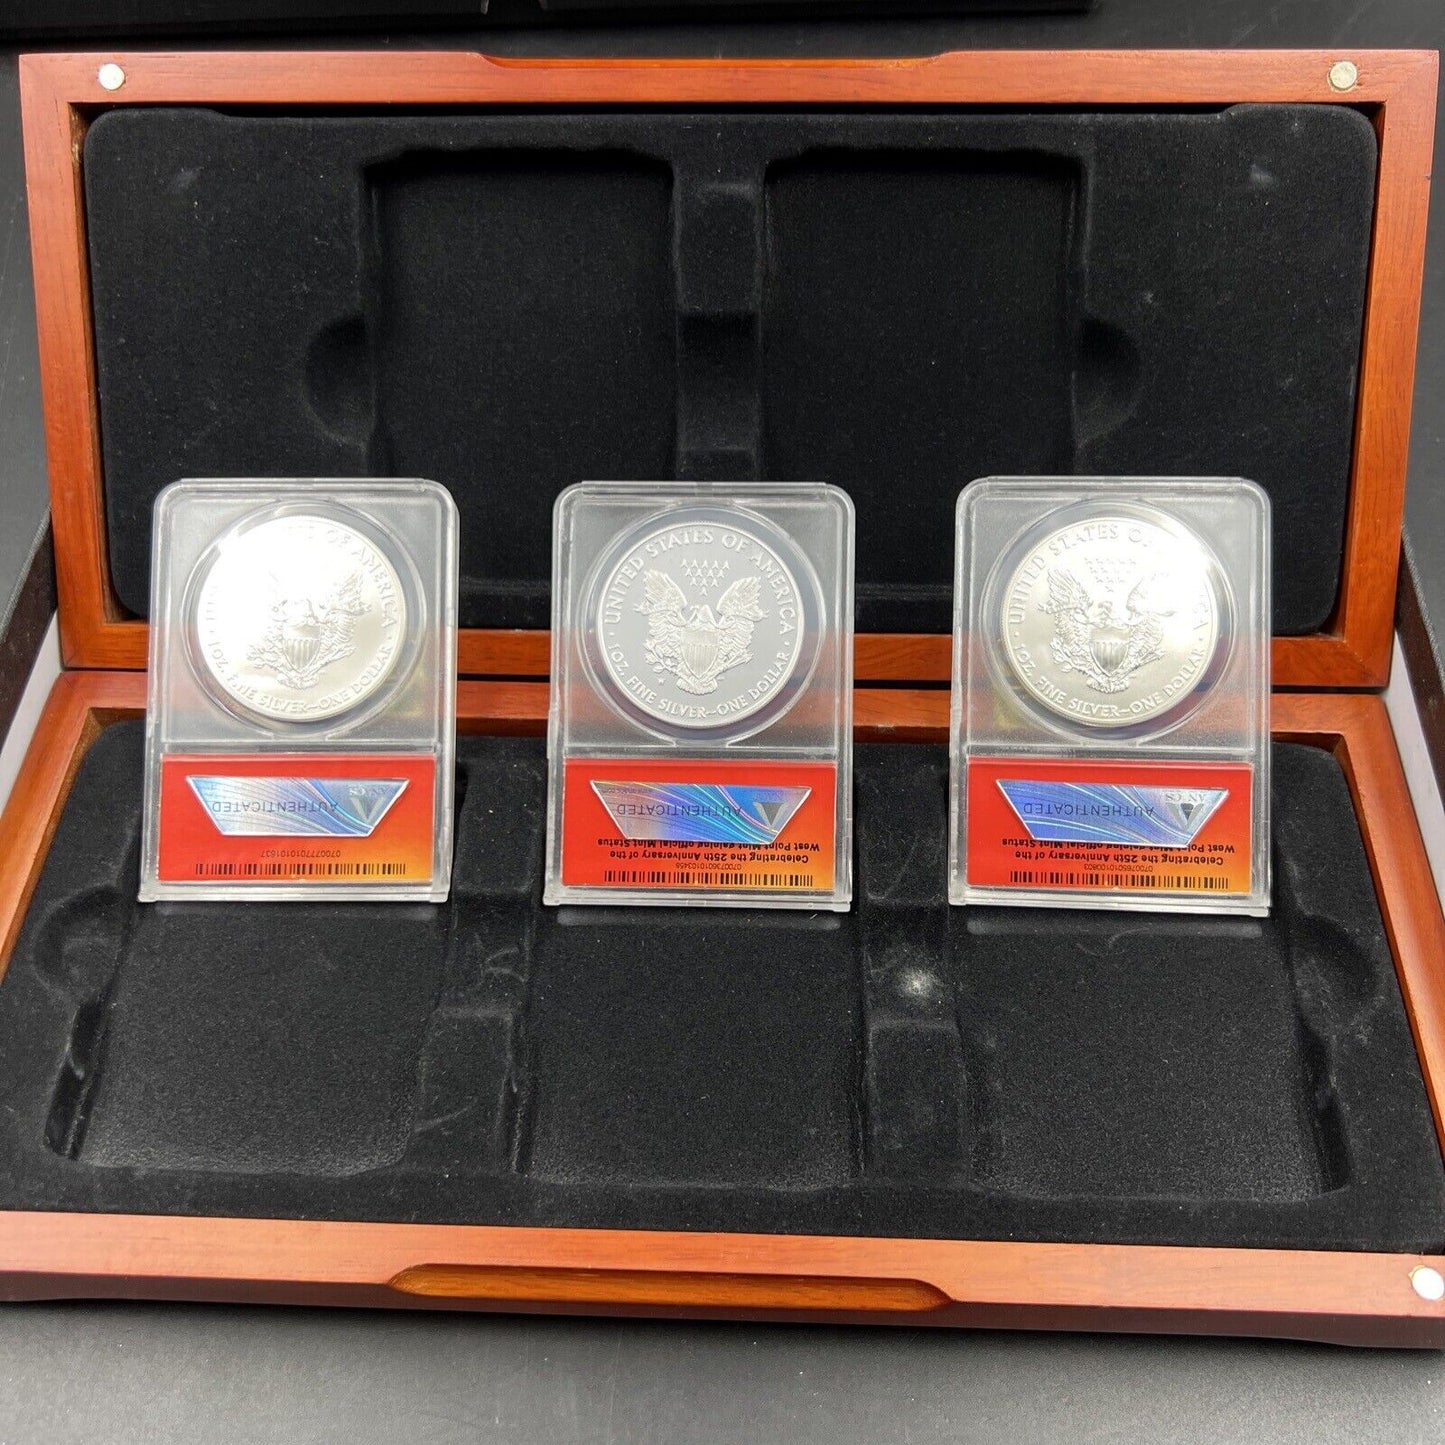 2013 3 Coin ASE 1 oz American Silver Eagle Set ANACS MS70 MS & Proof PR70 w/ box